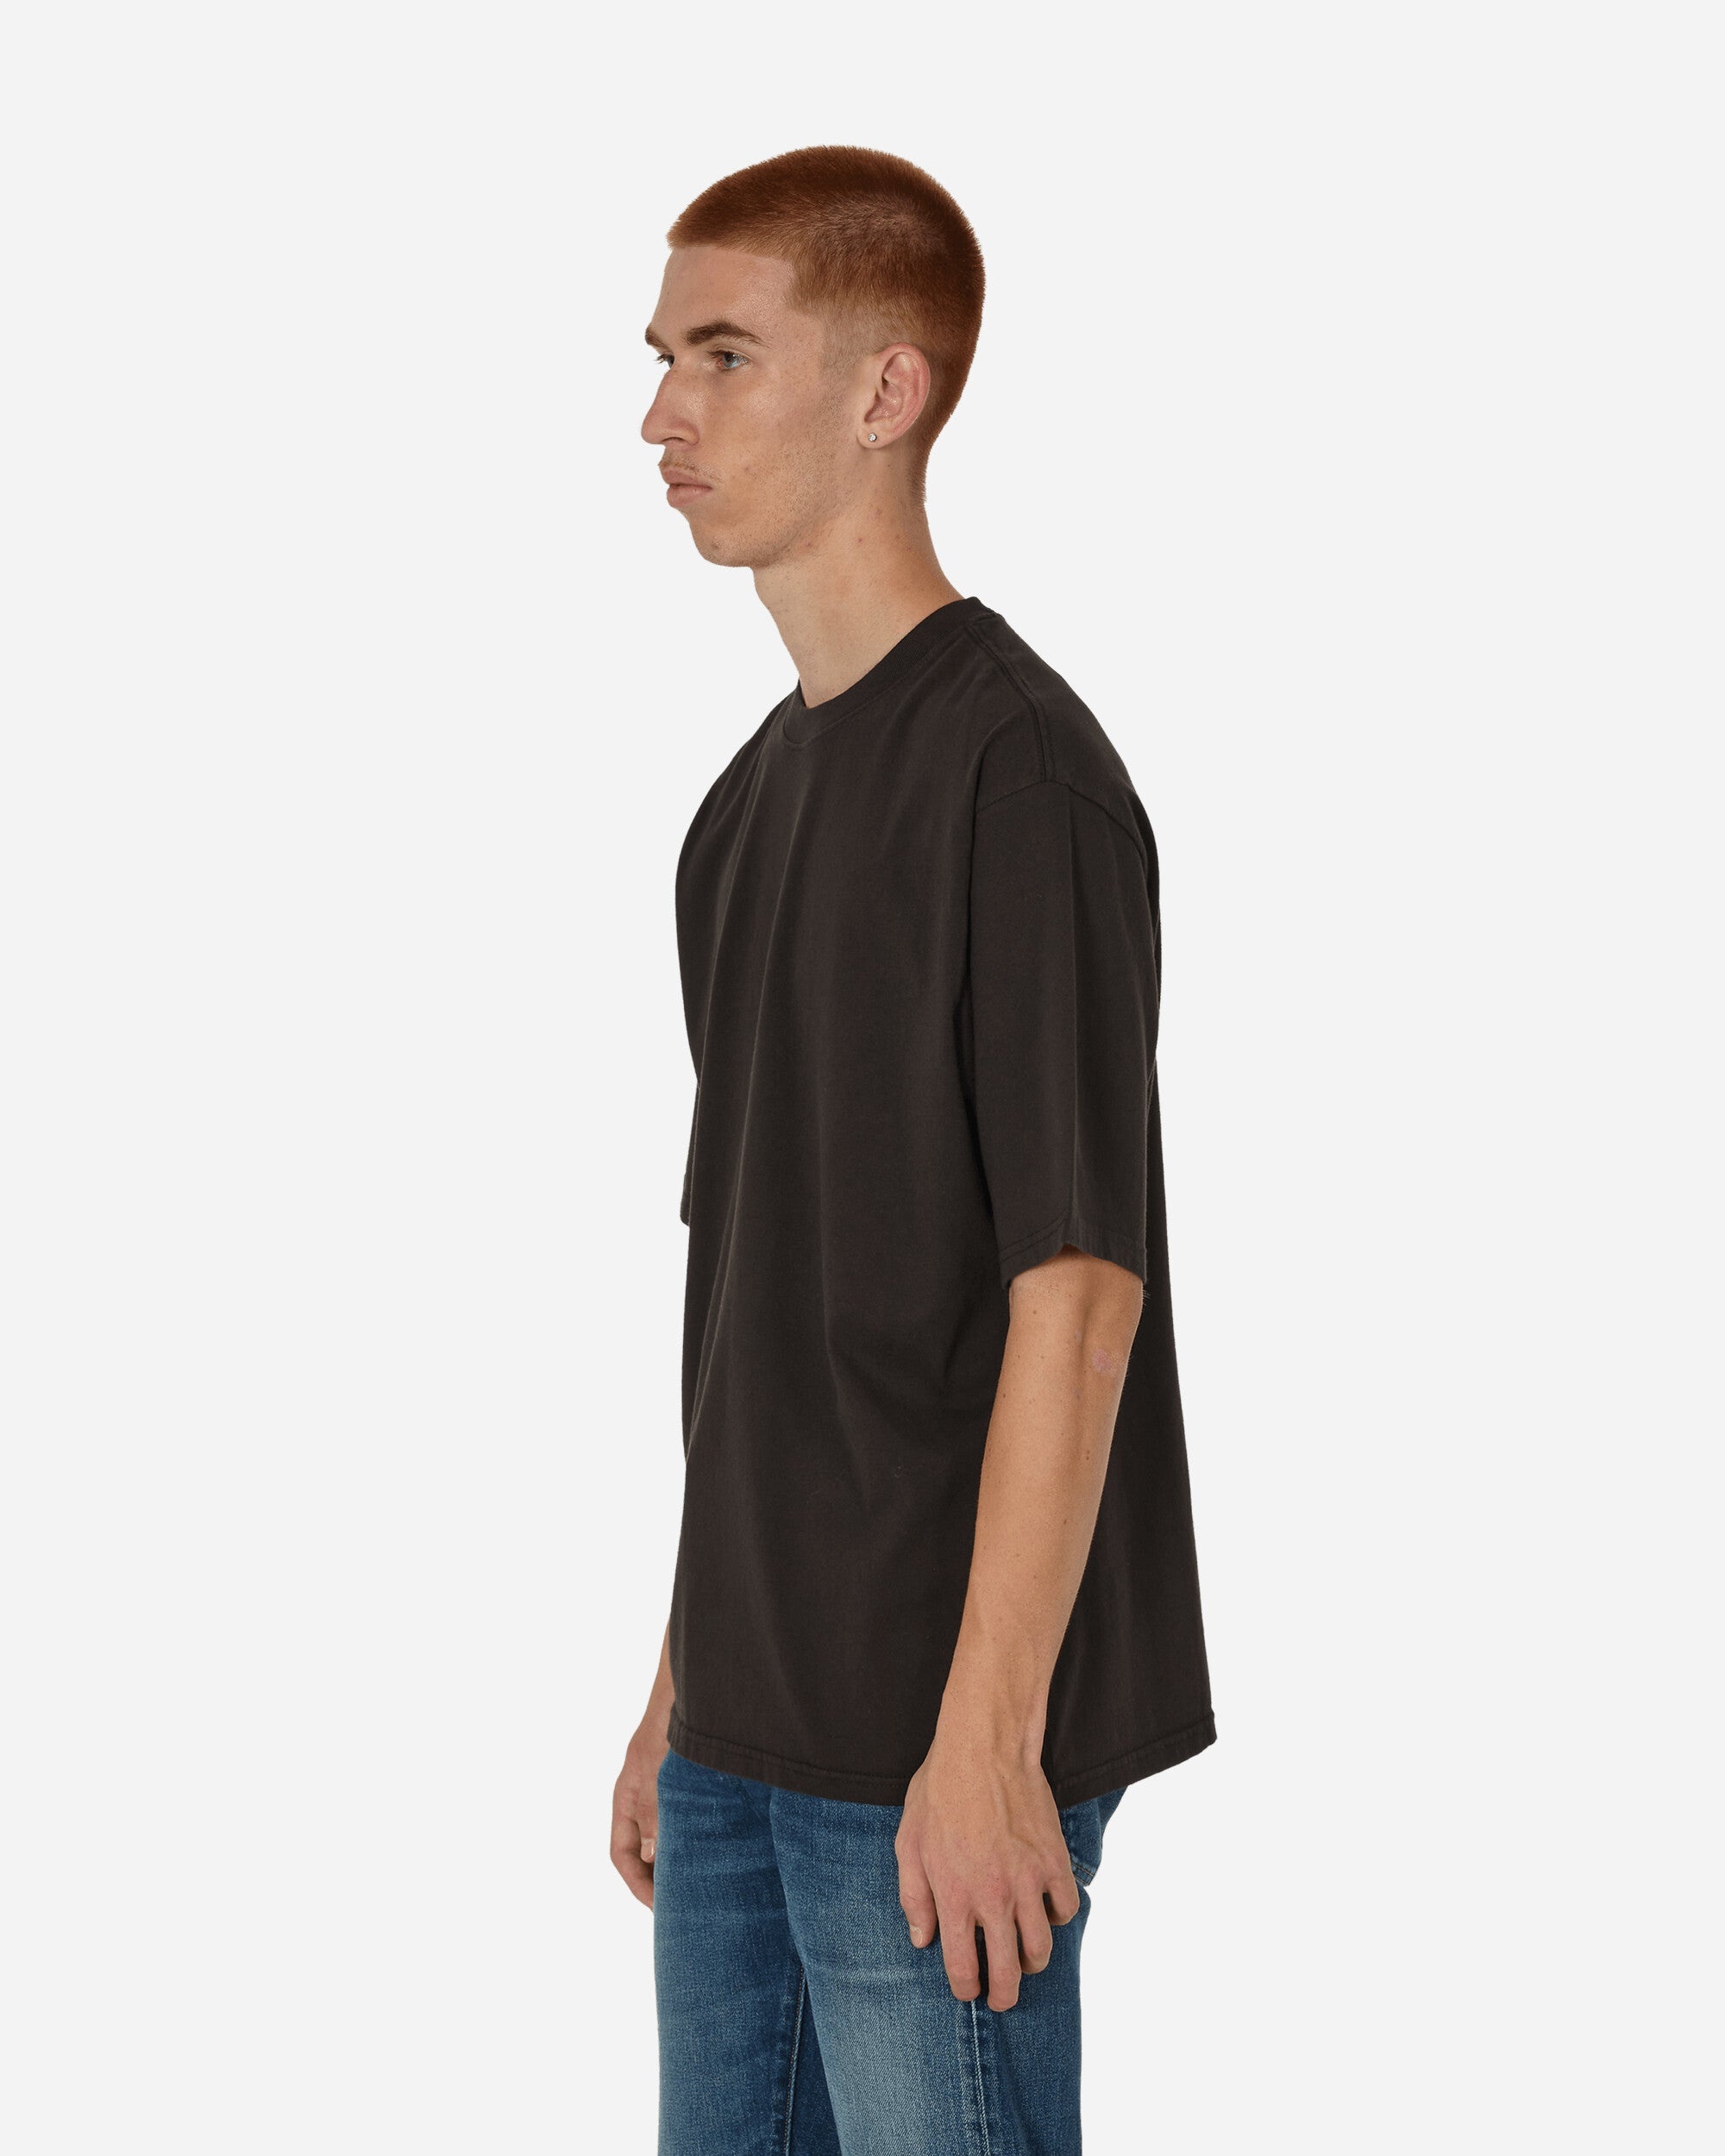 The Half Sleeve T-Shirt Black - 2